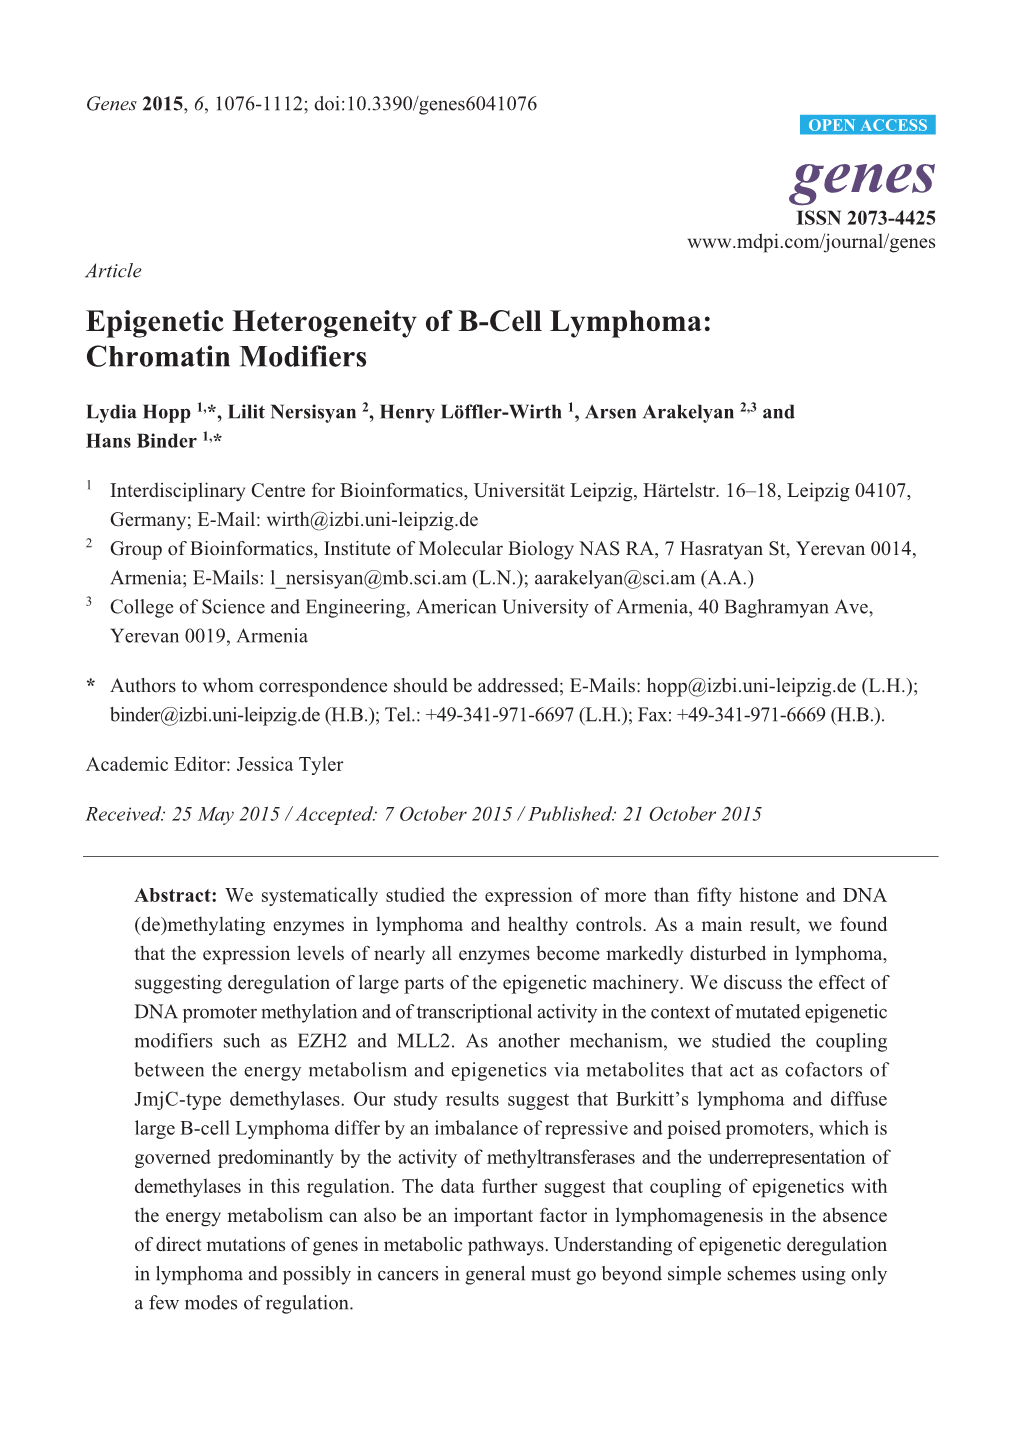 Epigenetic Heterogeneity of B-Cell Lymphoma: Chromatin Modifiers